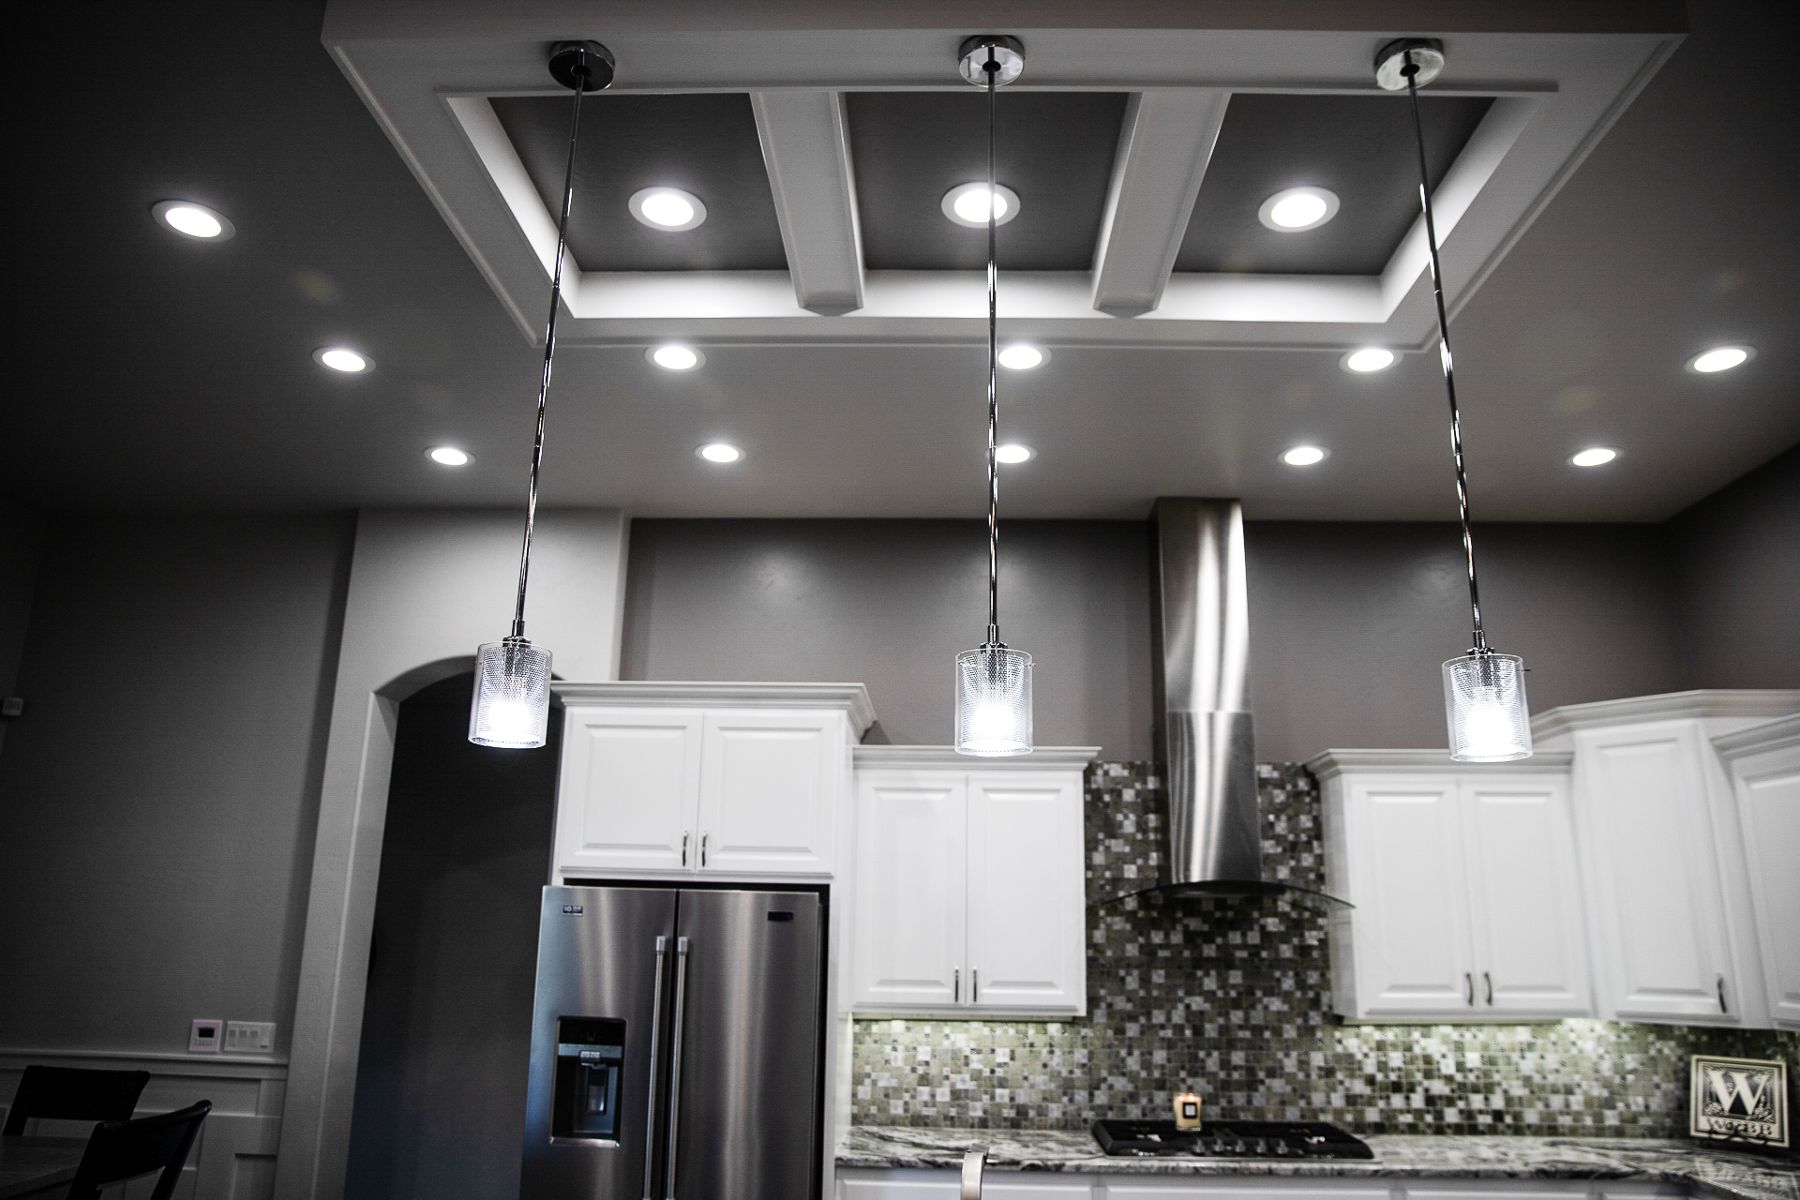 Kitchen with modern mood lighting.